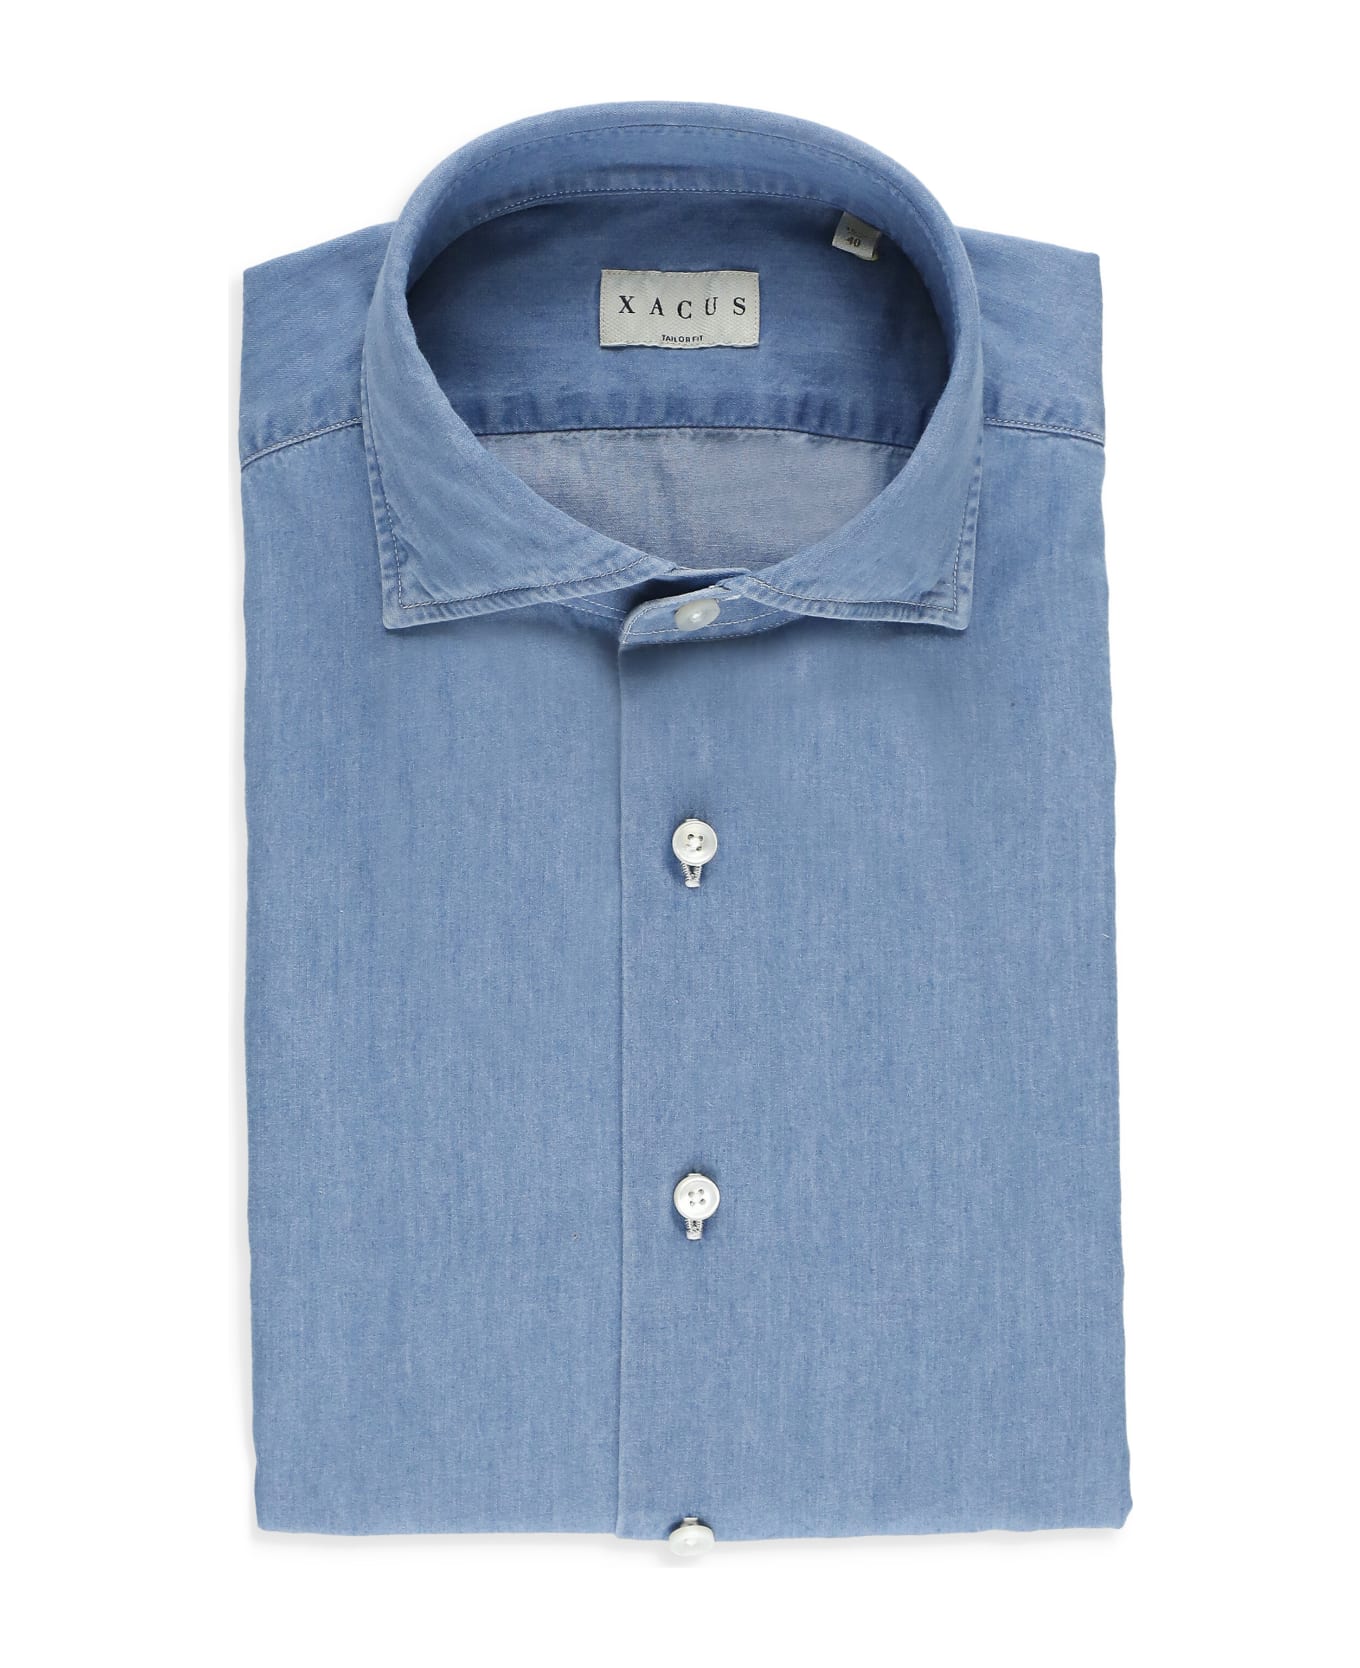 Xacus Cotton Shirt - Blue